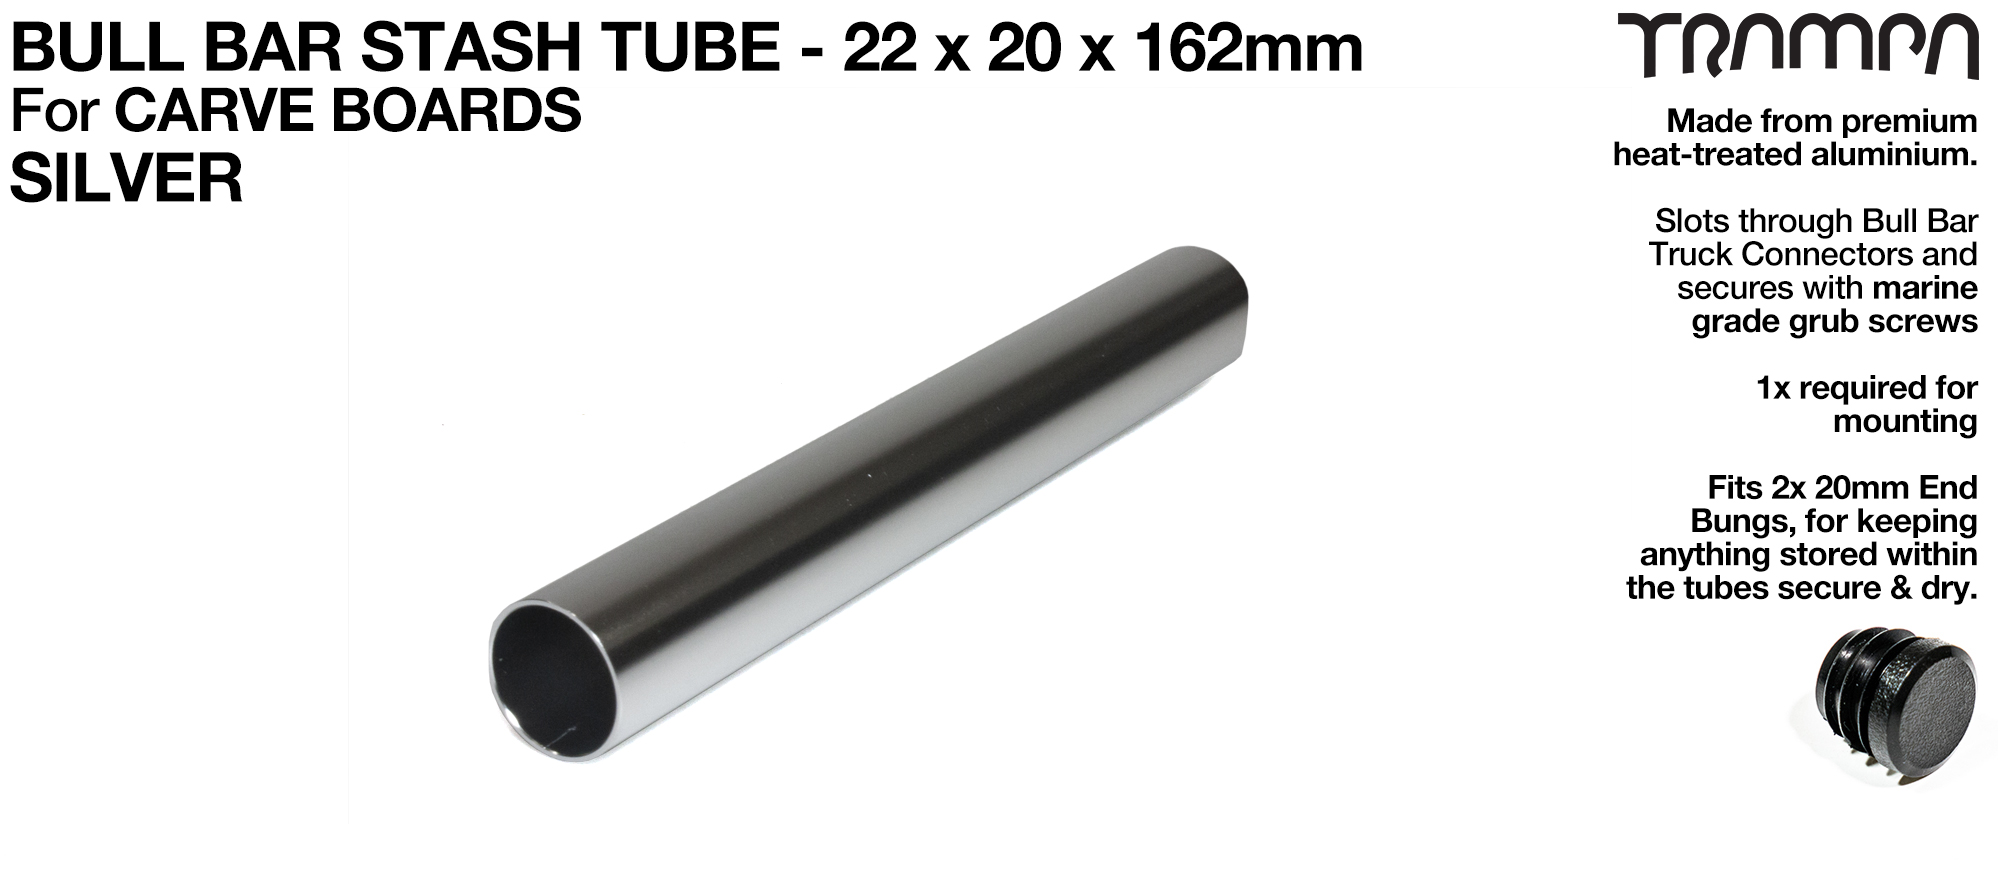 Carve Board Bull Bar Hollow Aluminium Stash Tube - SILVER 22 x 20 x 162 mm